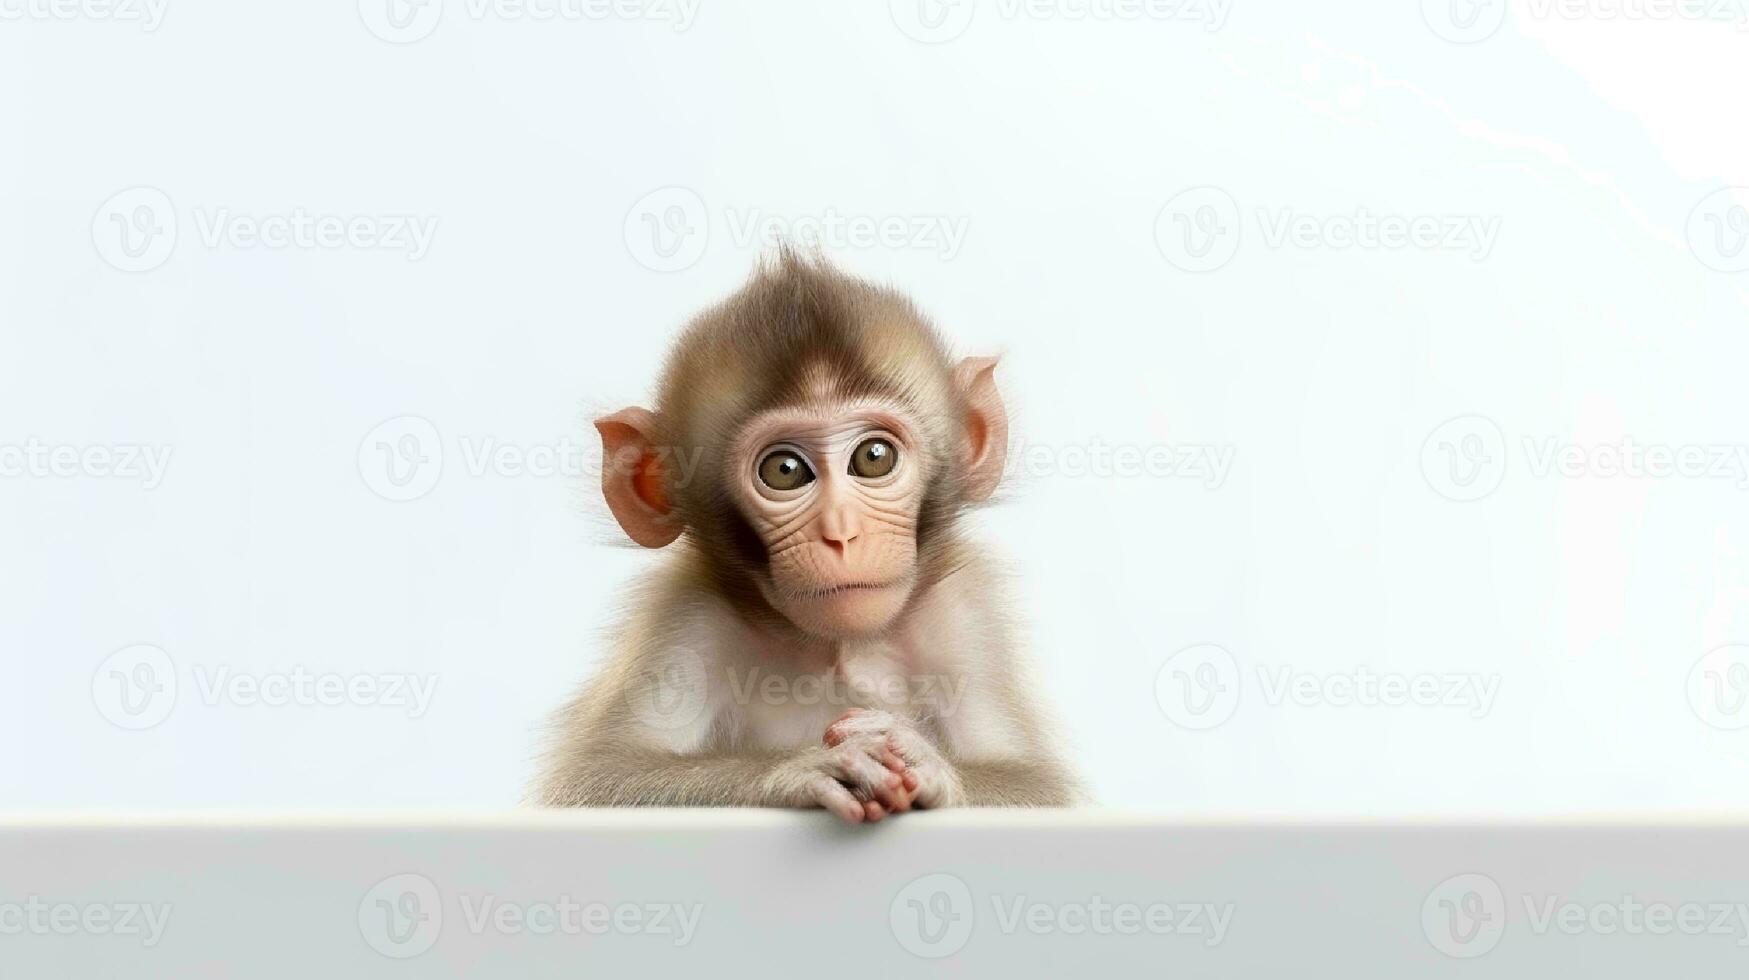 Fotografia Com Foco Raso Do Macaco Branco · Foto profissional gratuita